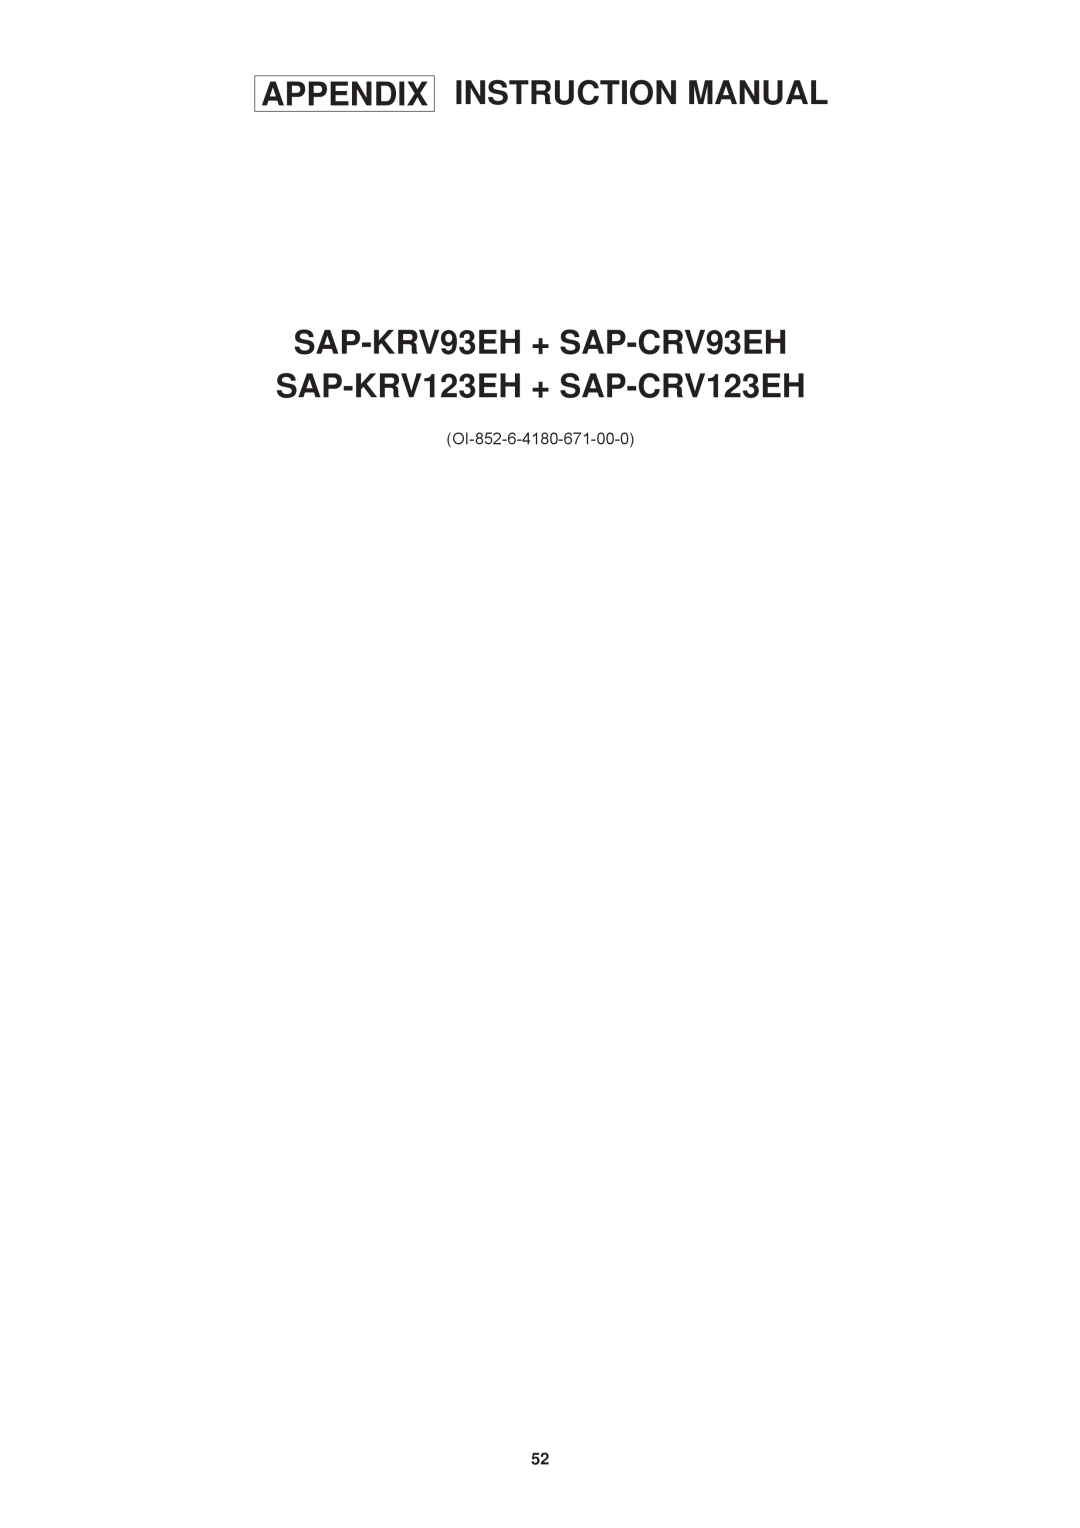 Sanyo SAP-KRV123EH, SAP-KRV93EH, SAP-CRV123EH, SAP-CRV93EH service manual Appendix, OI-852-6-4180-671-00-0 